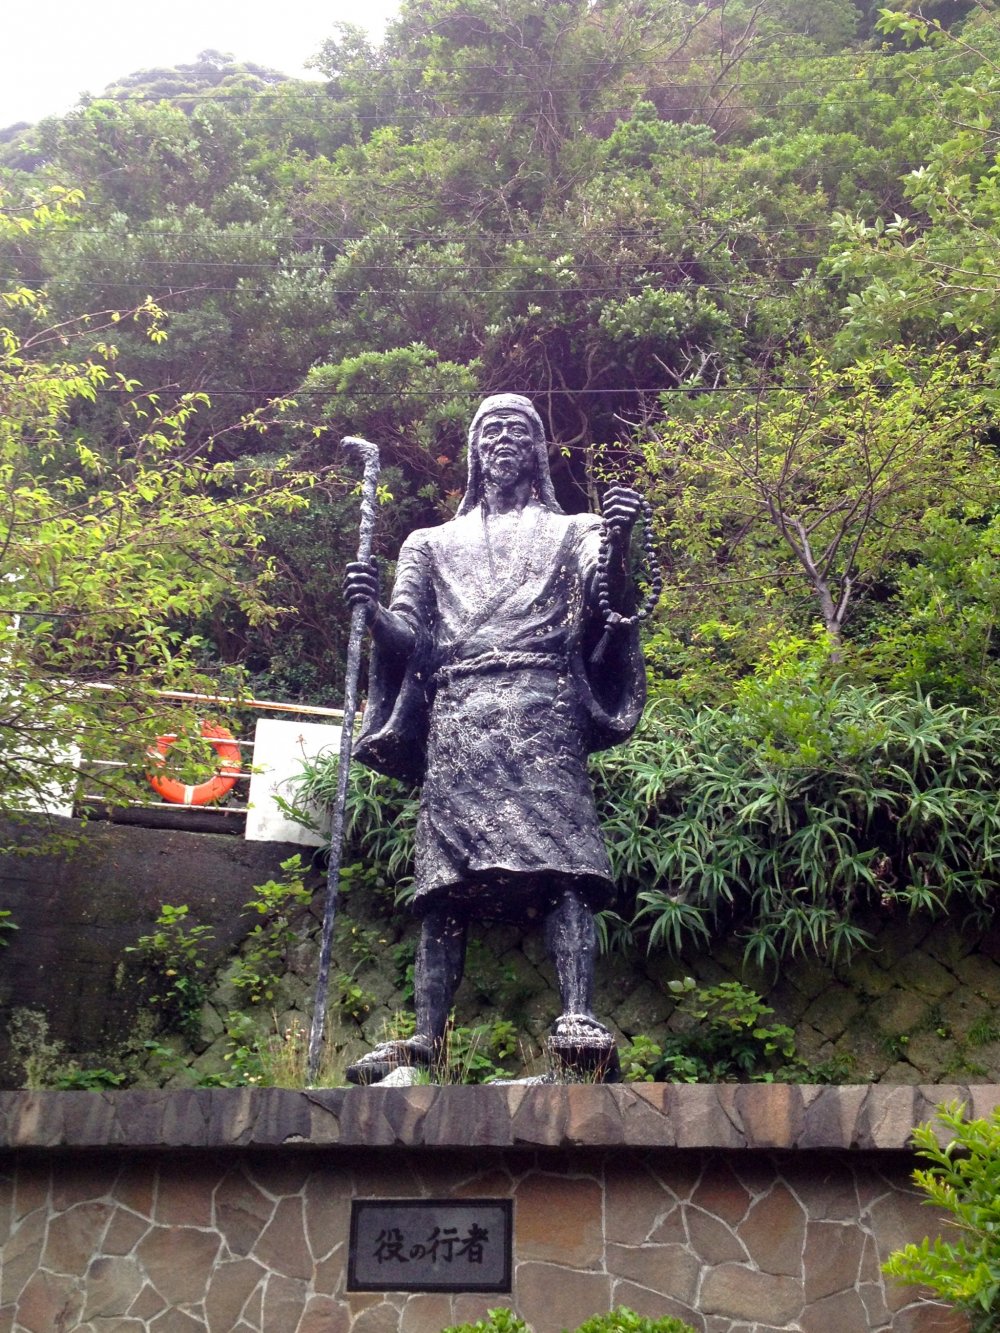 Statue of En no Gyoja, who lived in Izu c. 700